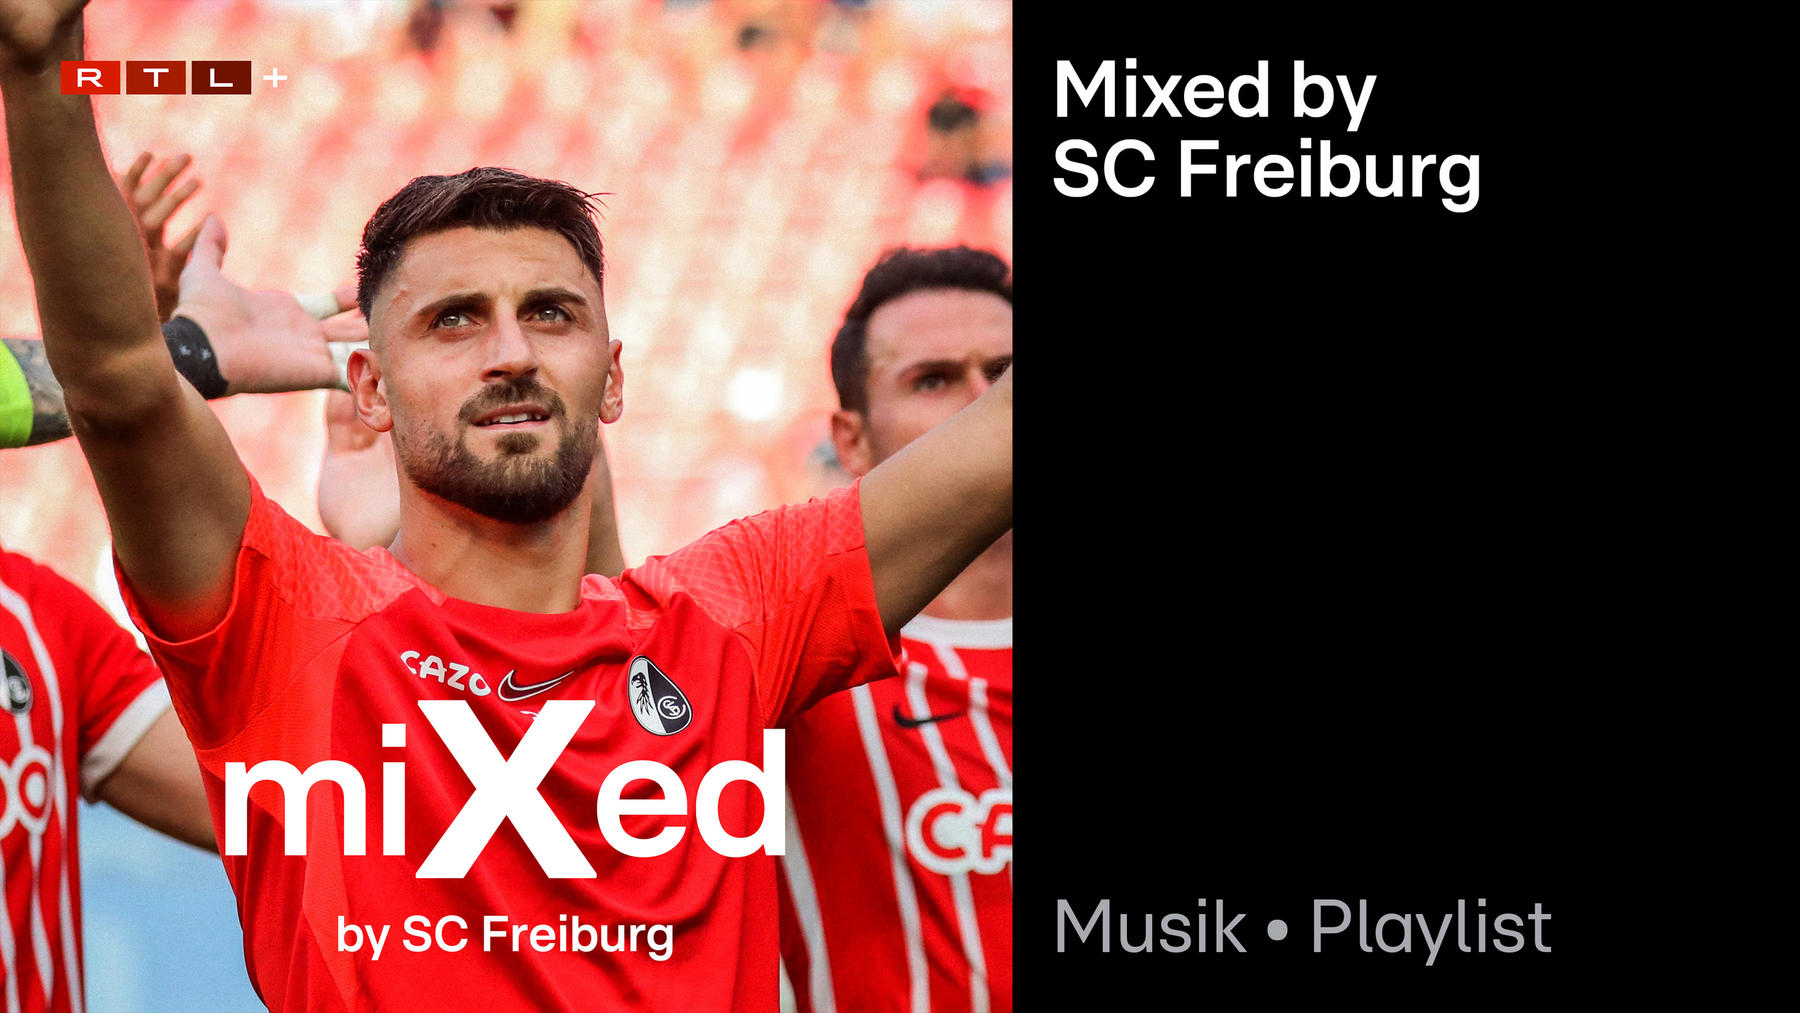 Mixed by SC Freiburg